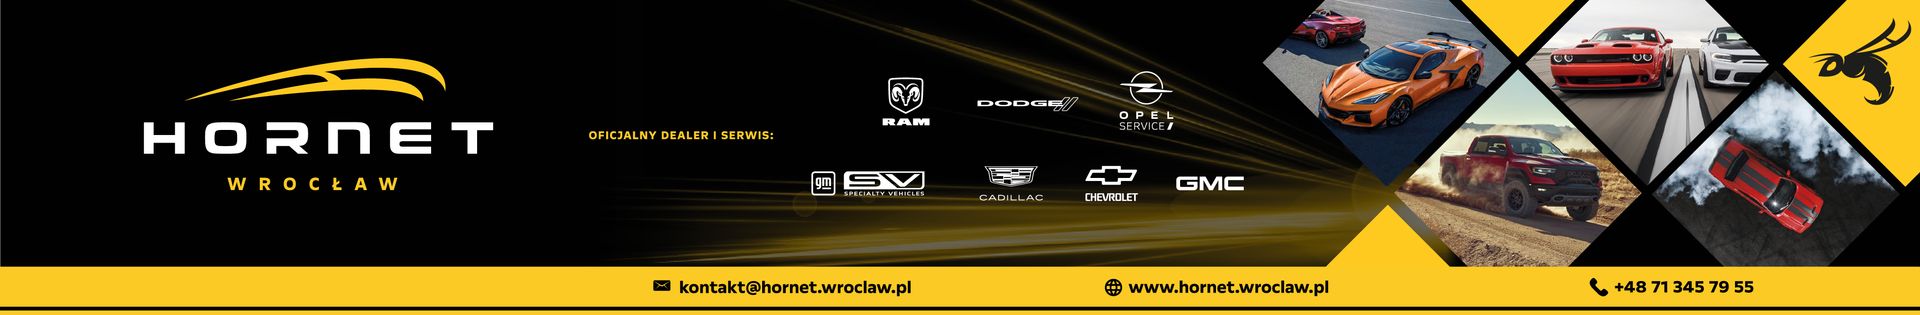 HORNET WROCŁAW - Oficjalny dealer - RAM, Dodge, Cadillac, Chevrolet, GMC top banner